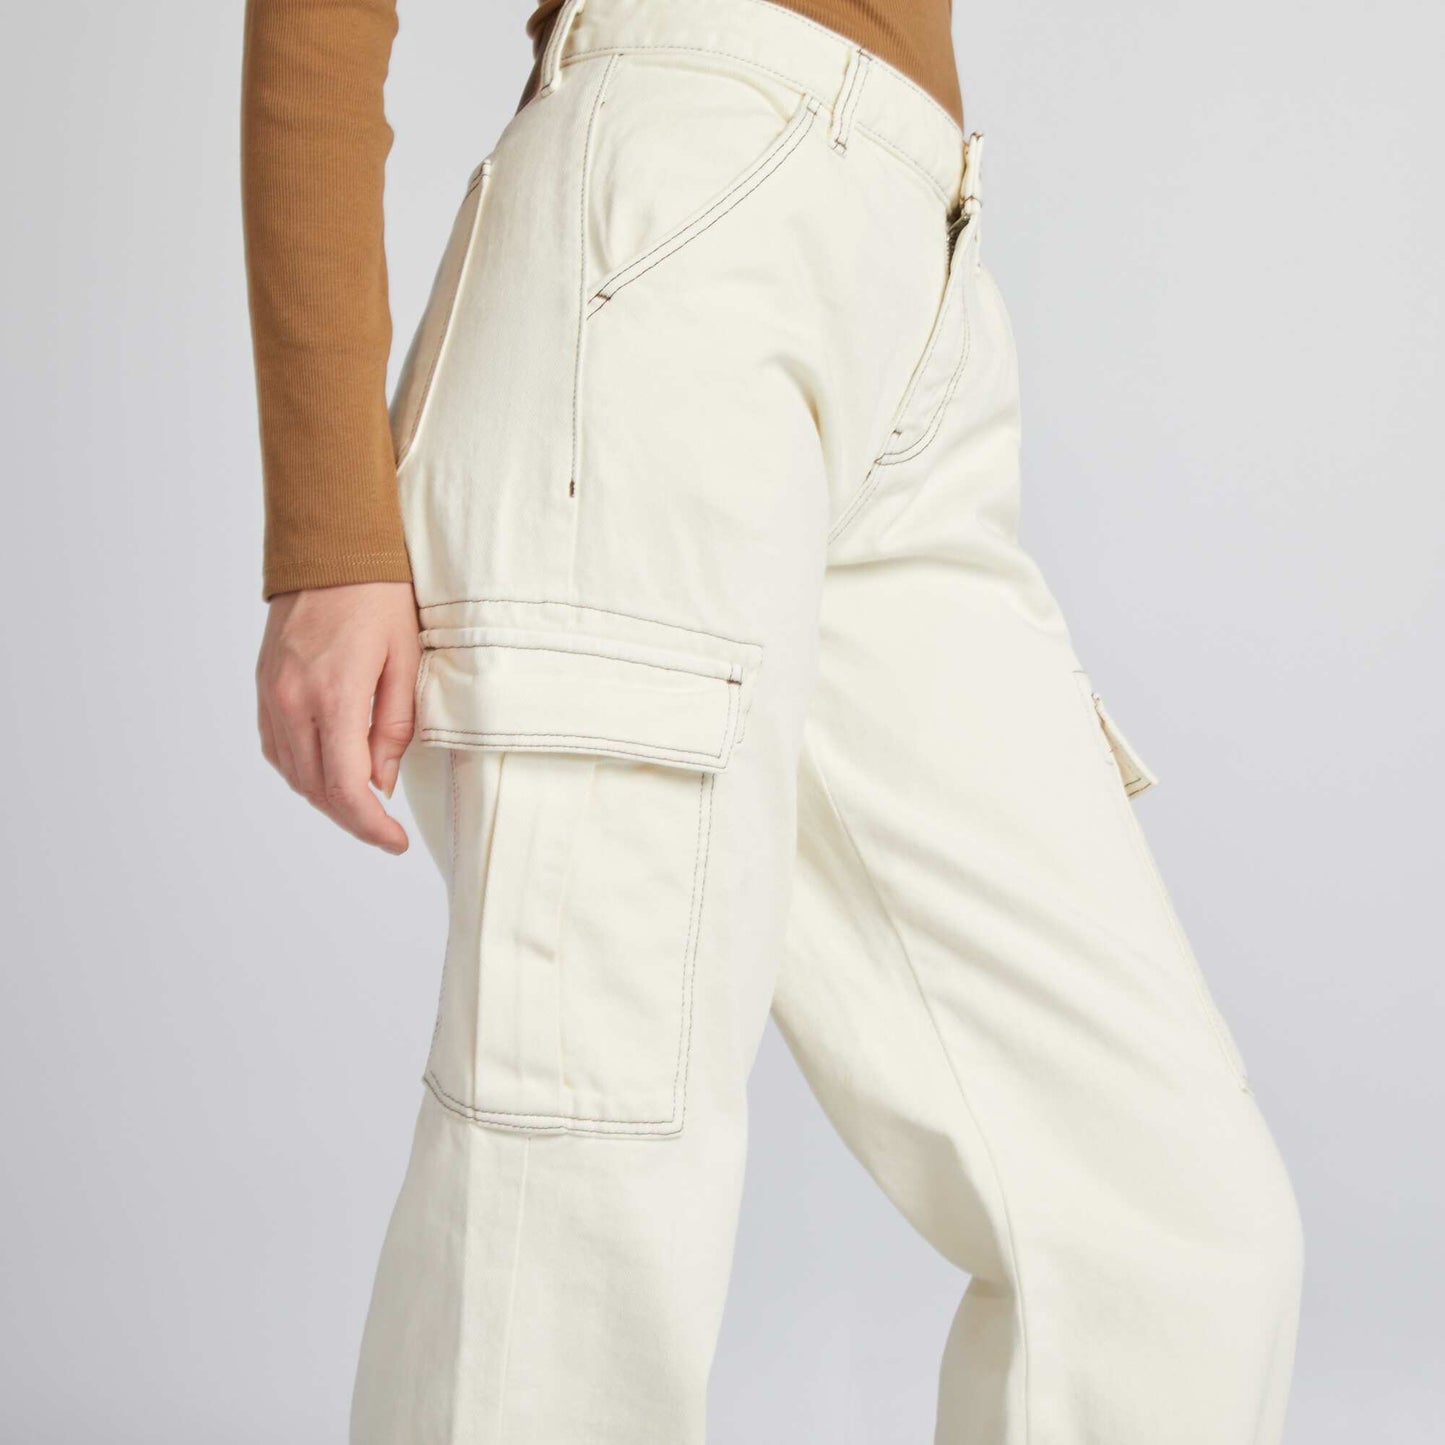 Pantalon avec poches rabats BLANC